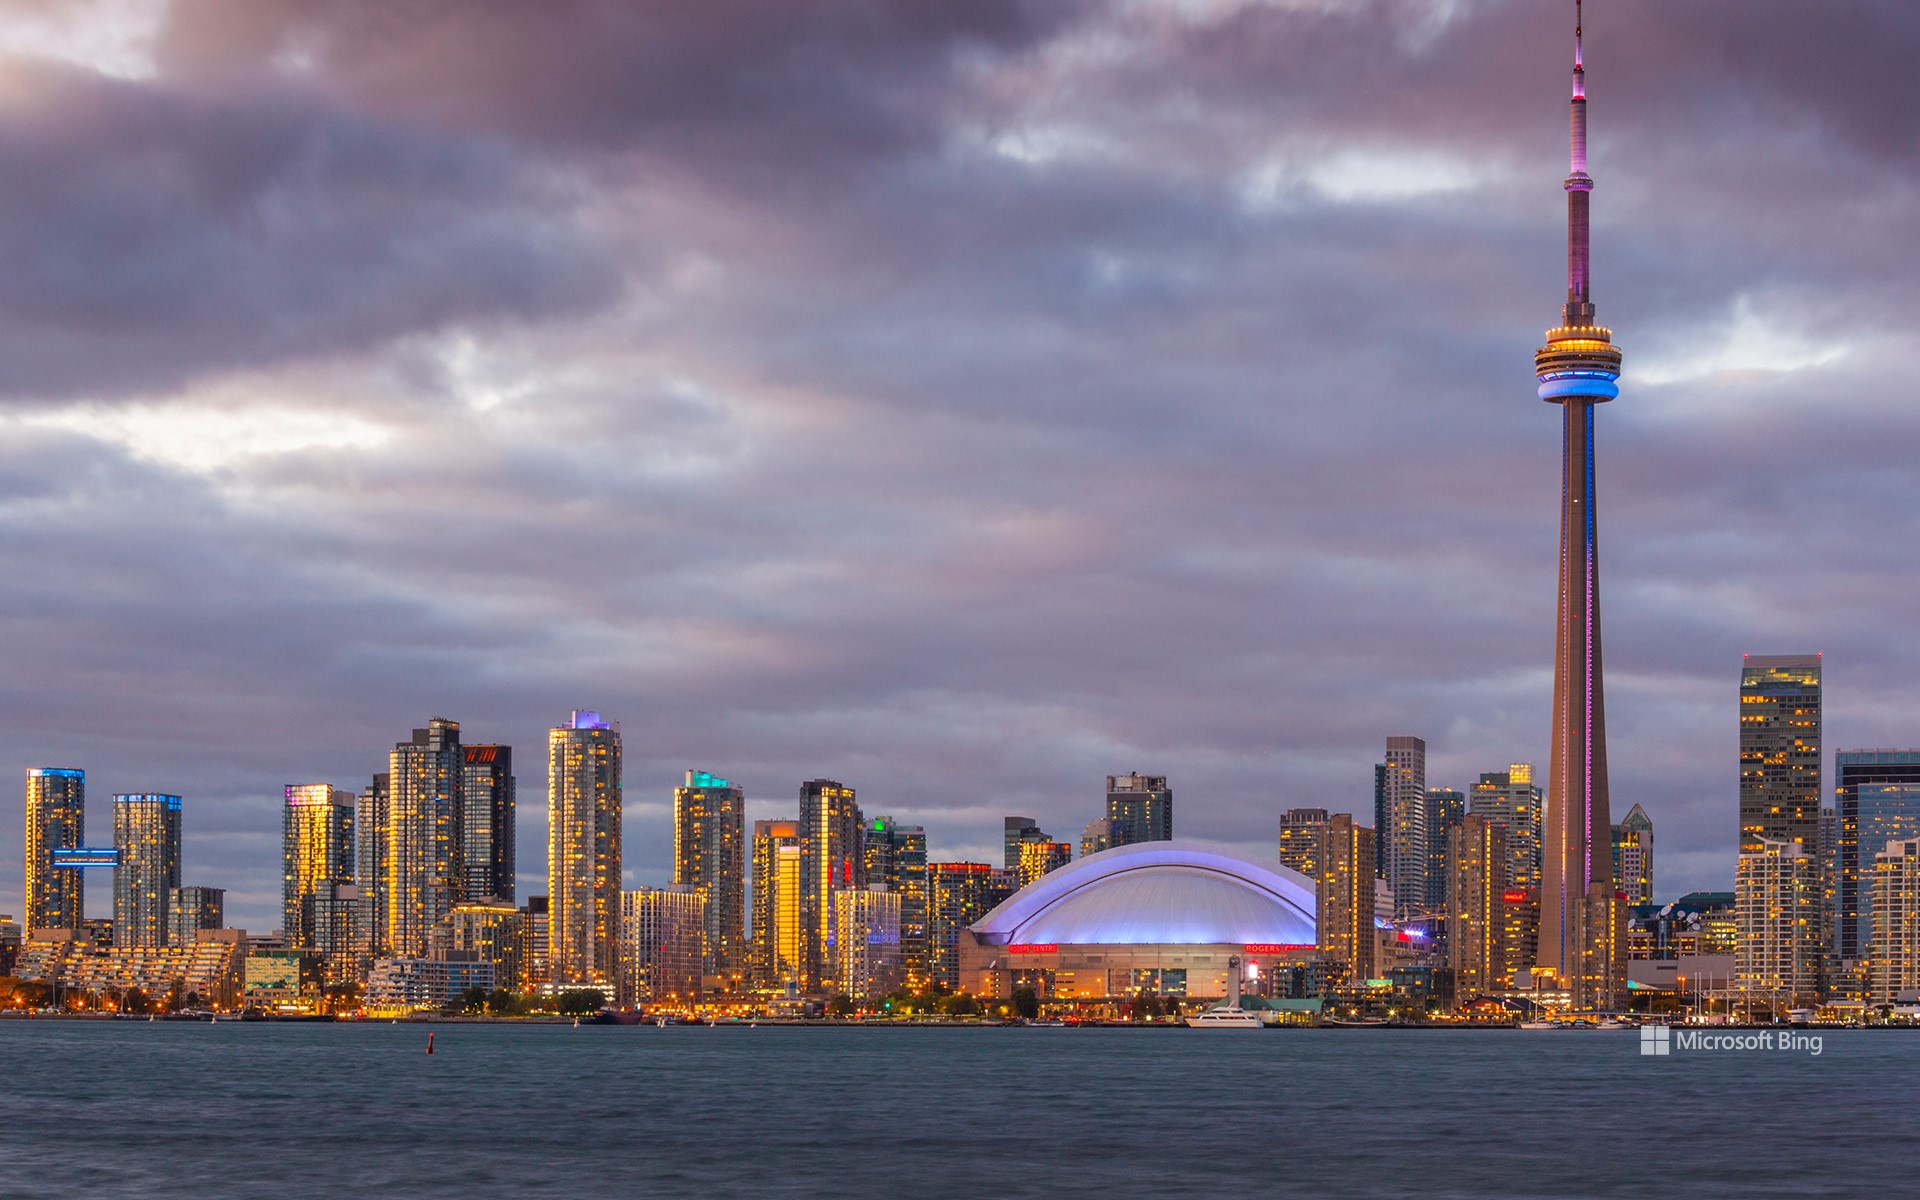 The Toronto skyline viewed from the Toronto Islands